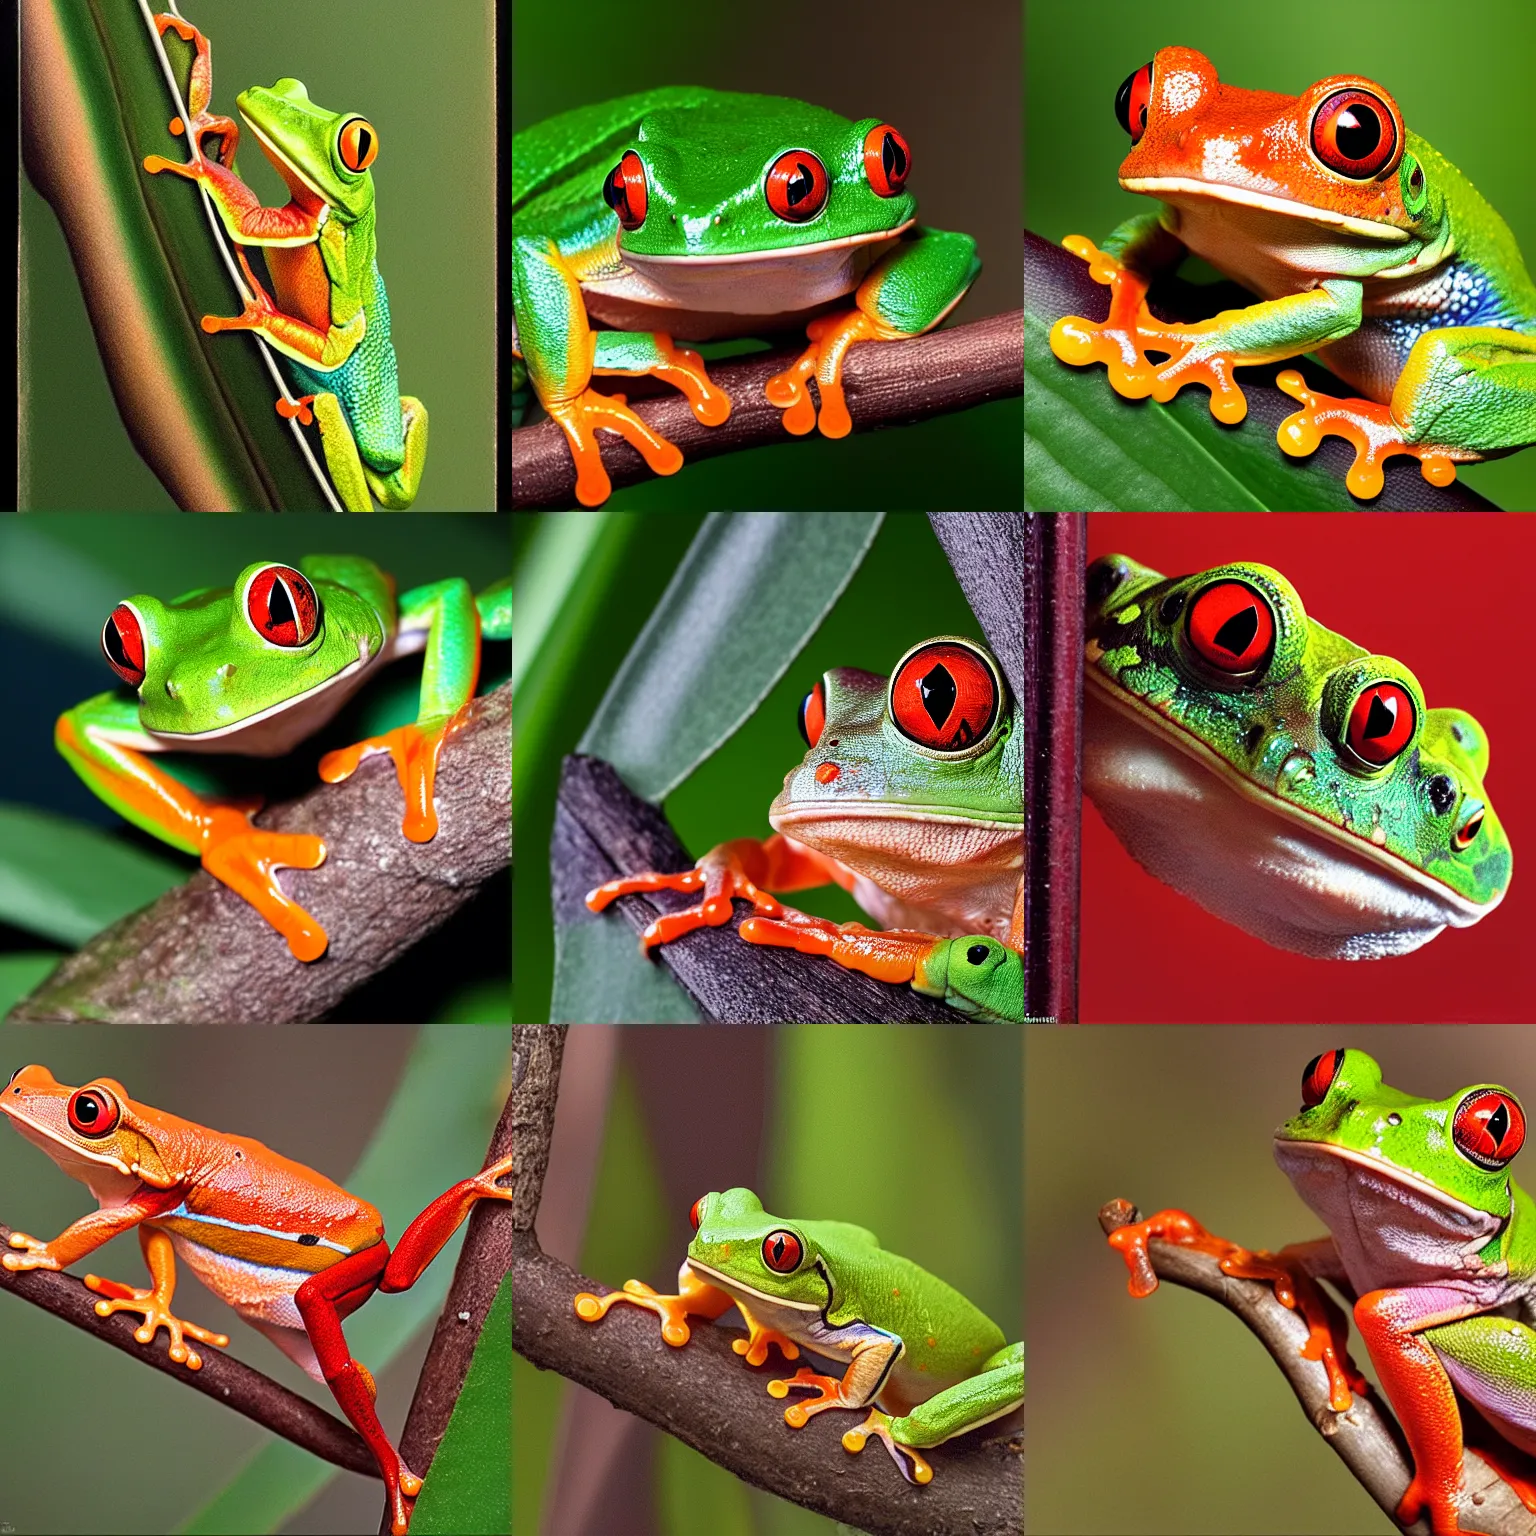 Prompt: a portrait of an australian red - eyed tree frog, ranoidea chloris, by greg hildebrandt and greg rutkowski